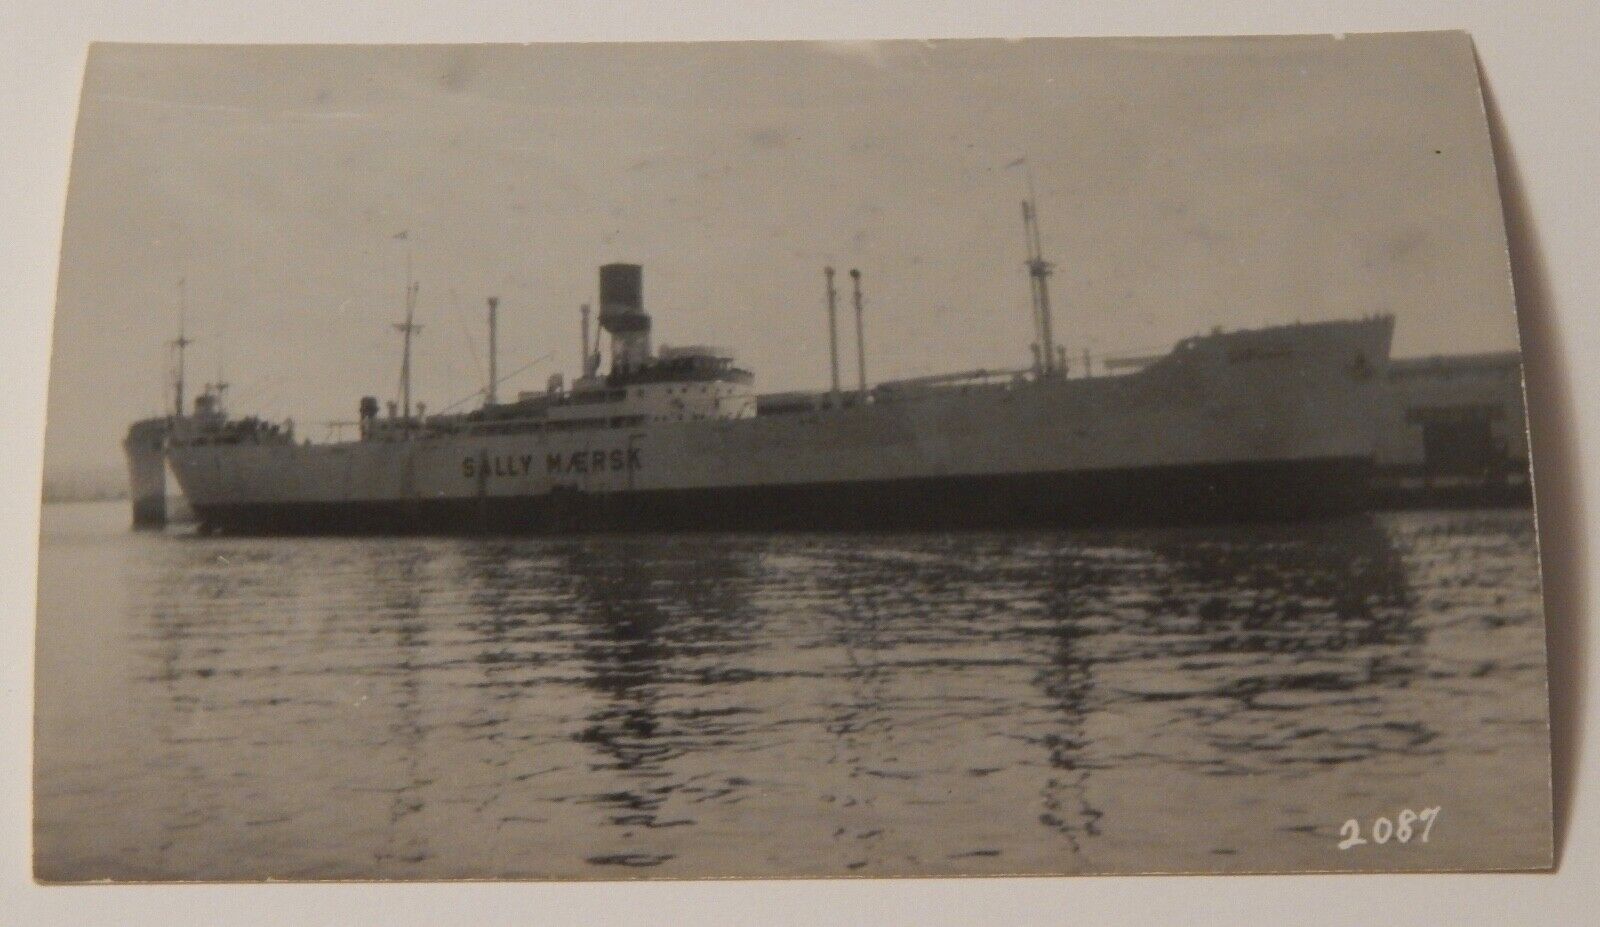 Steamship Steamer SALLY MAERSK real photo postcard RPPC